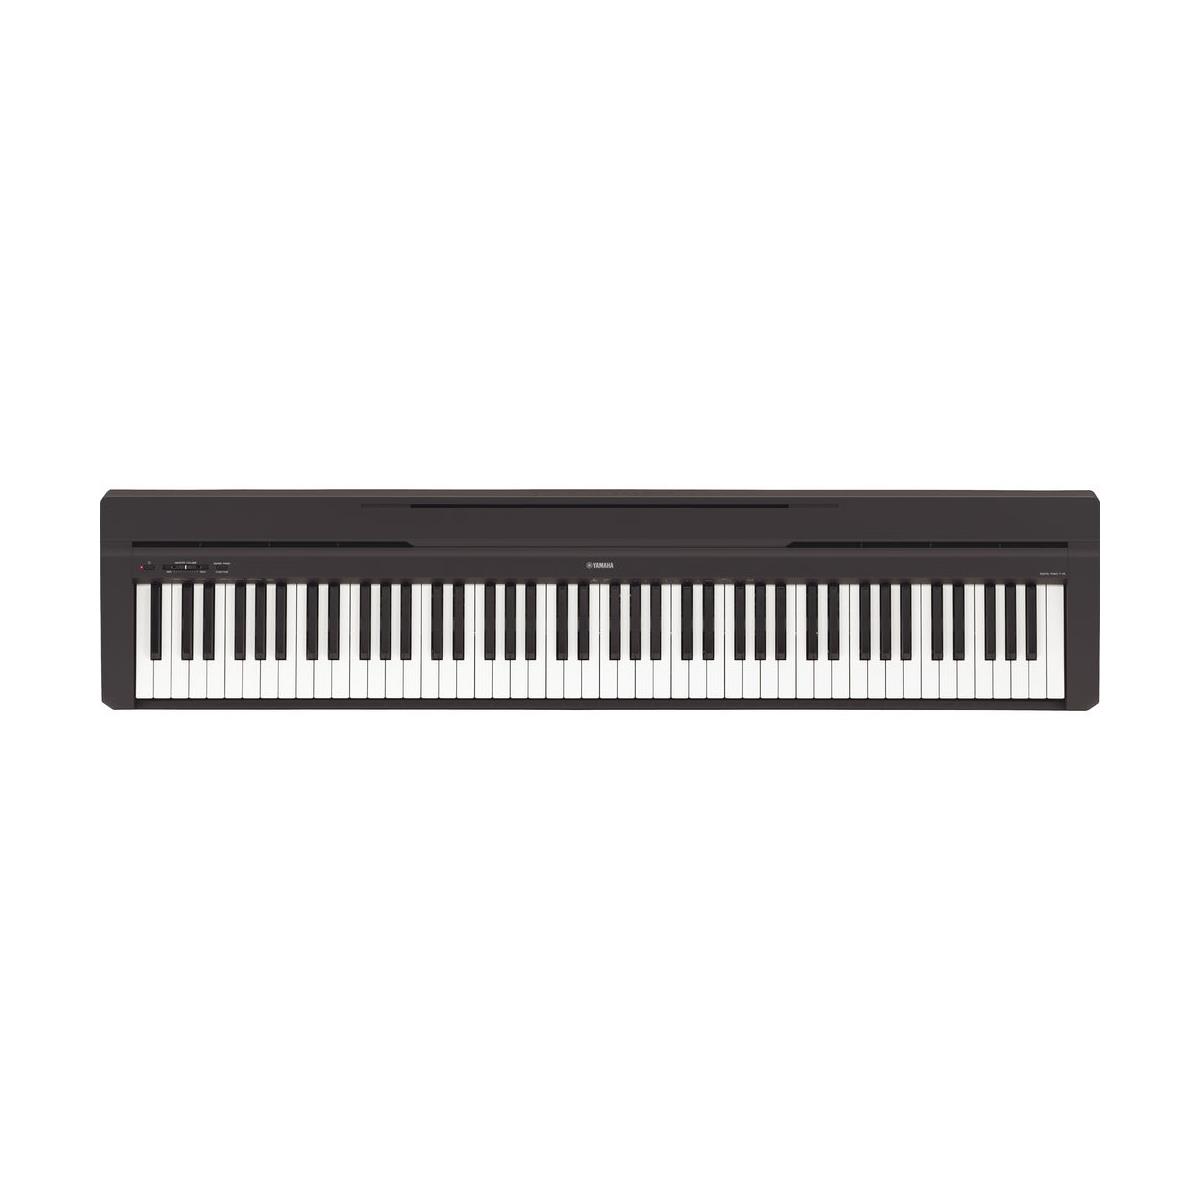 Yamaha P-45 88-Key Portable Digital Piano $419 + free s/h